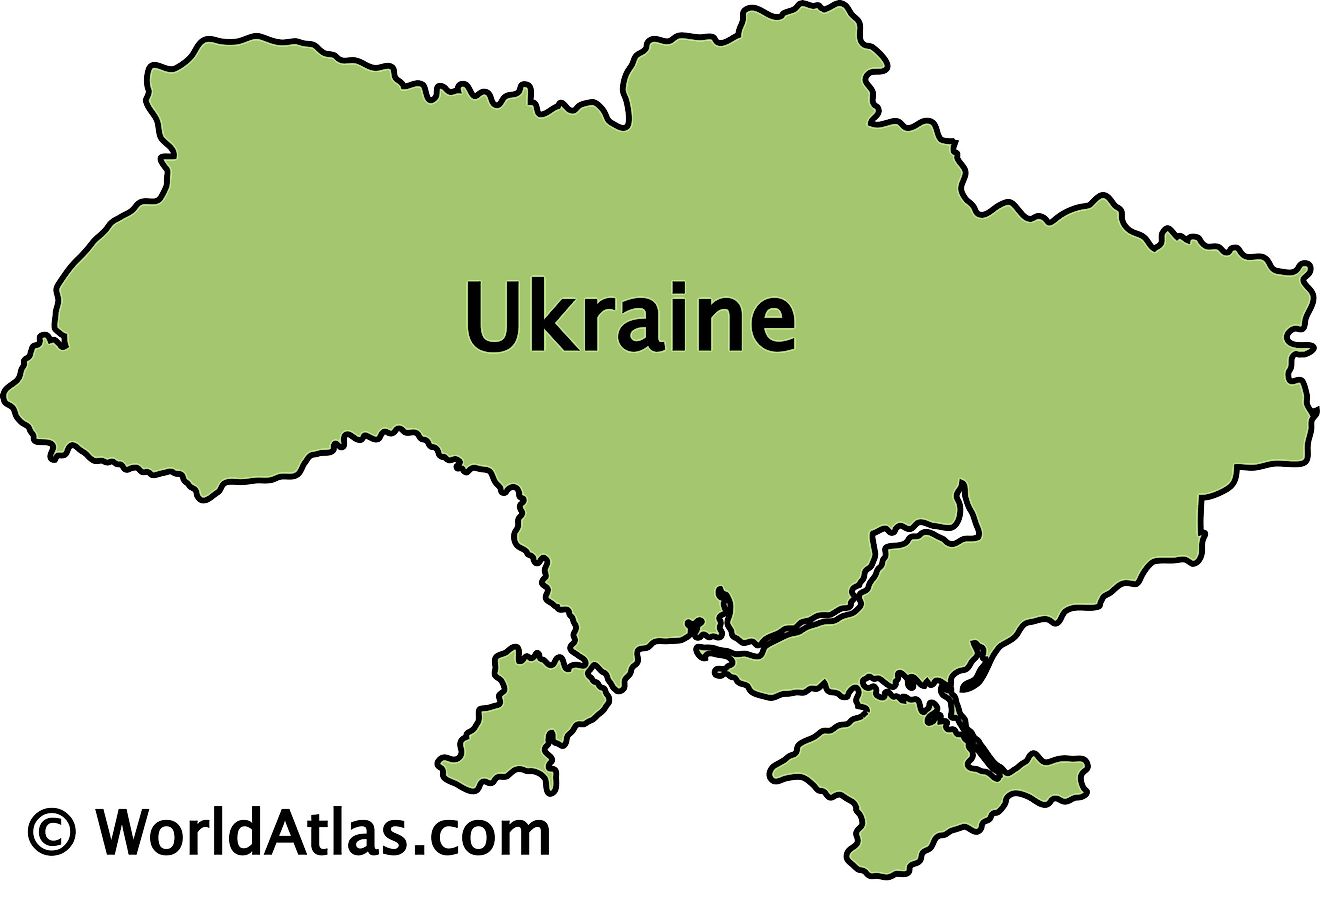 Ukraine Maps & Facts - World Atlas